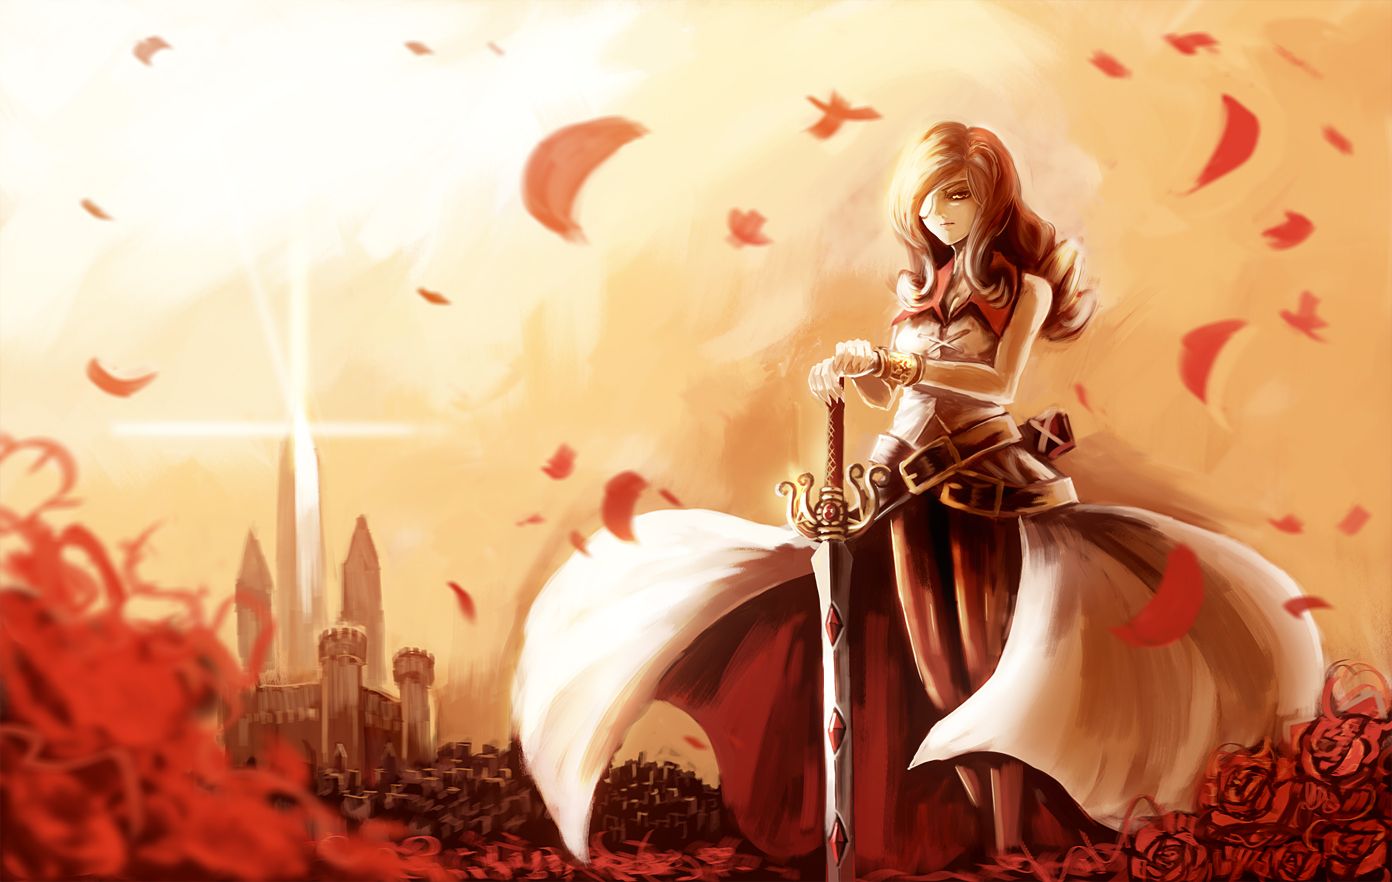 Beatrix (Final Fantasy IX) Anime Image Board